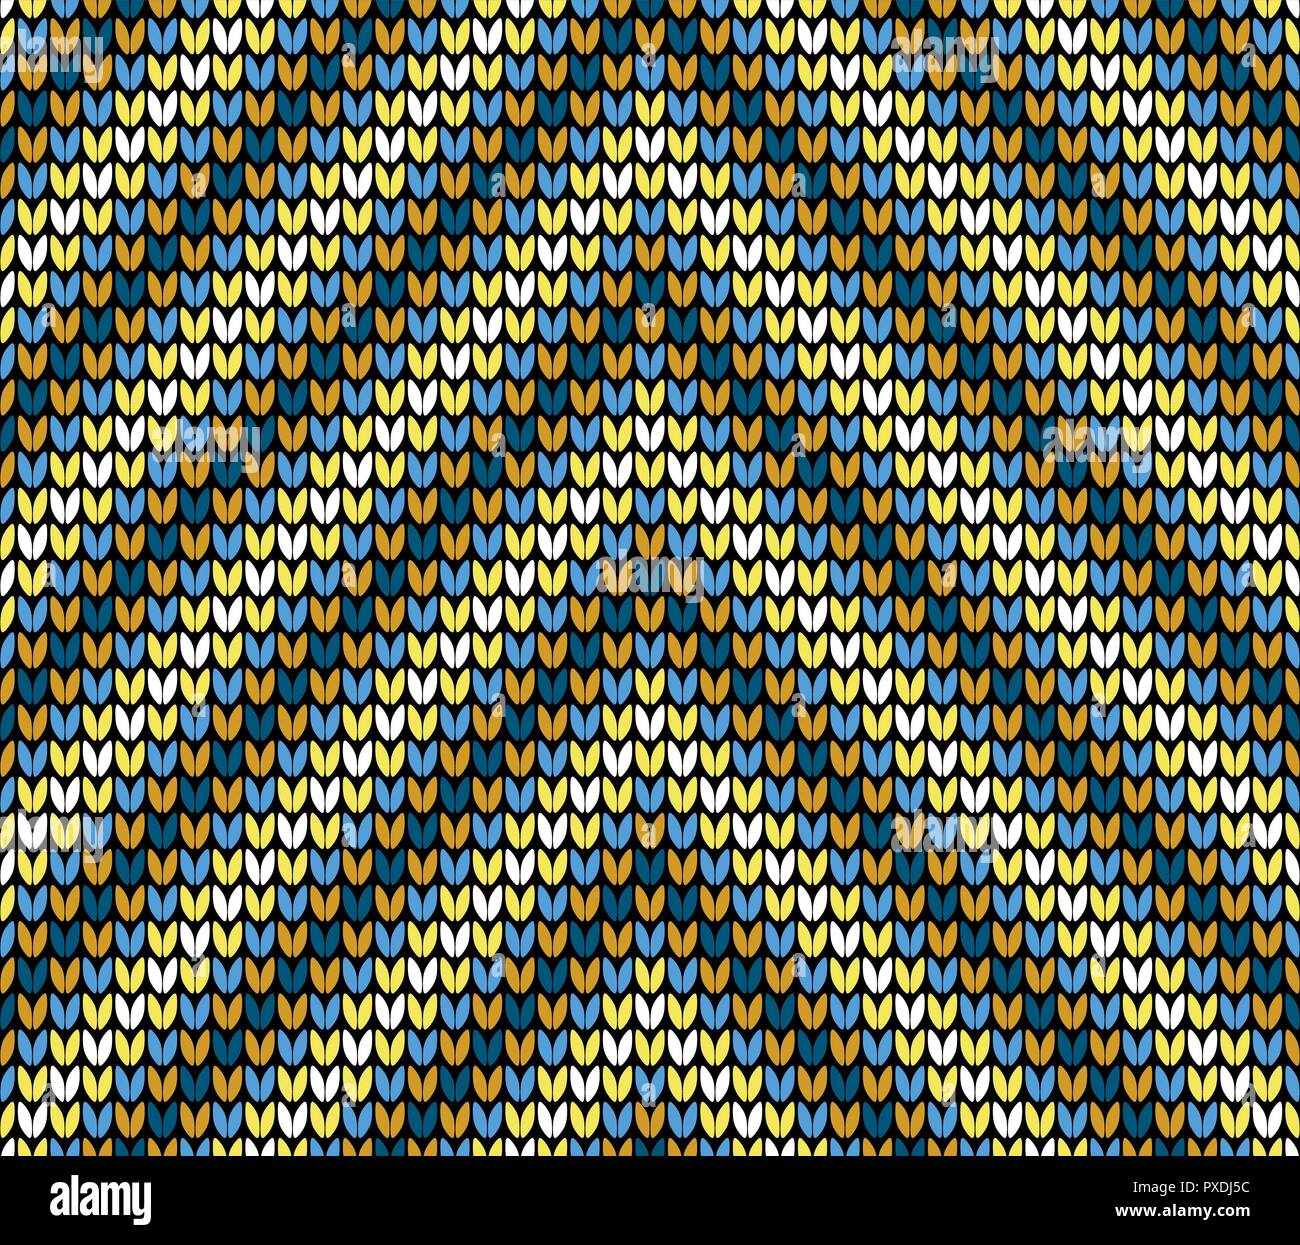 Abstract golden seamless knitting corner pattern background Stock Vector